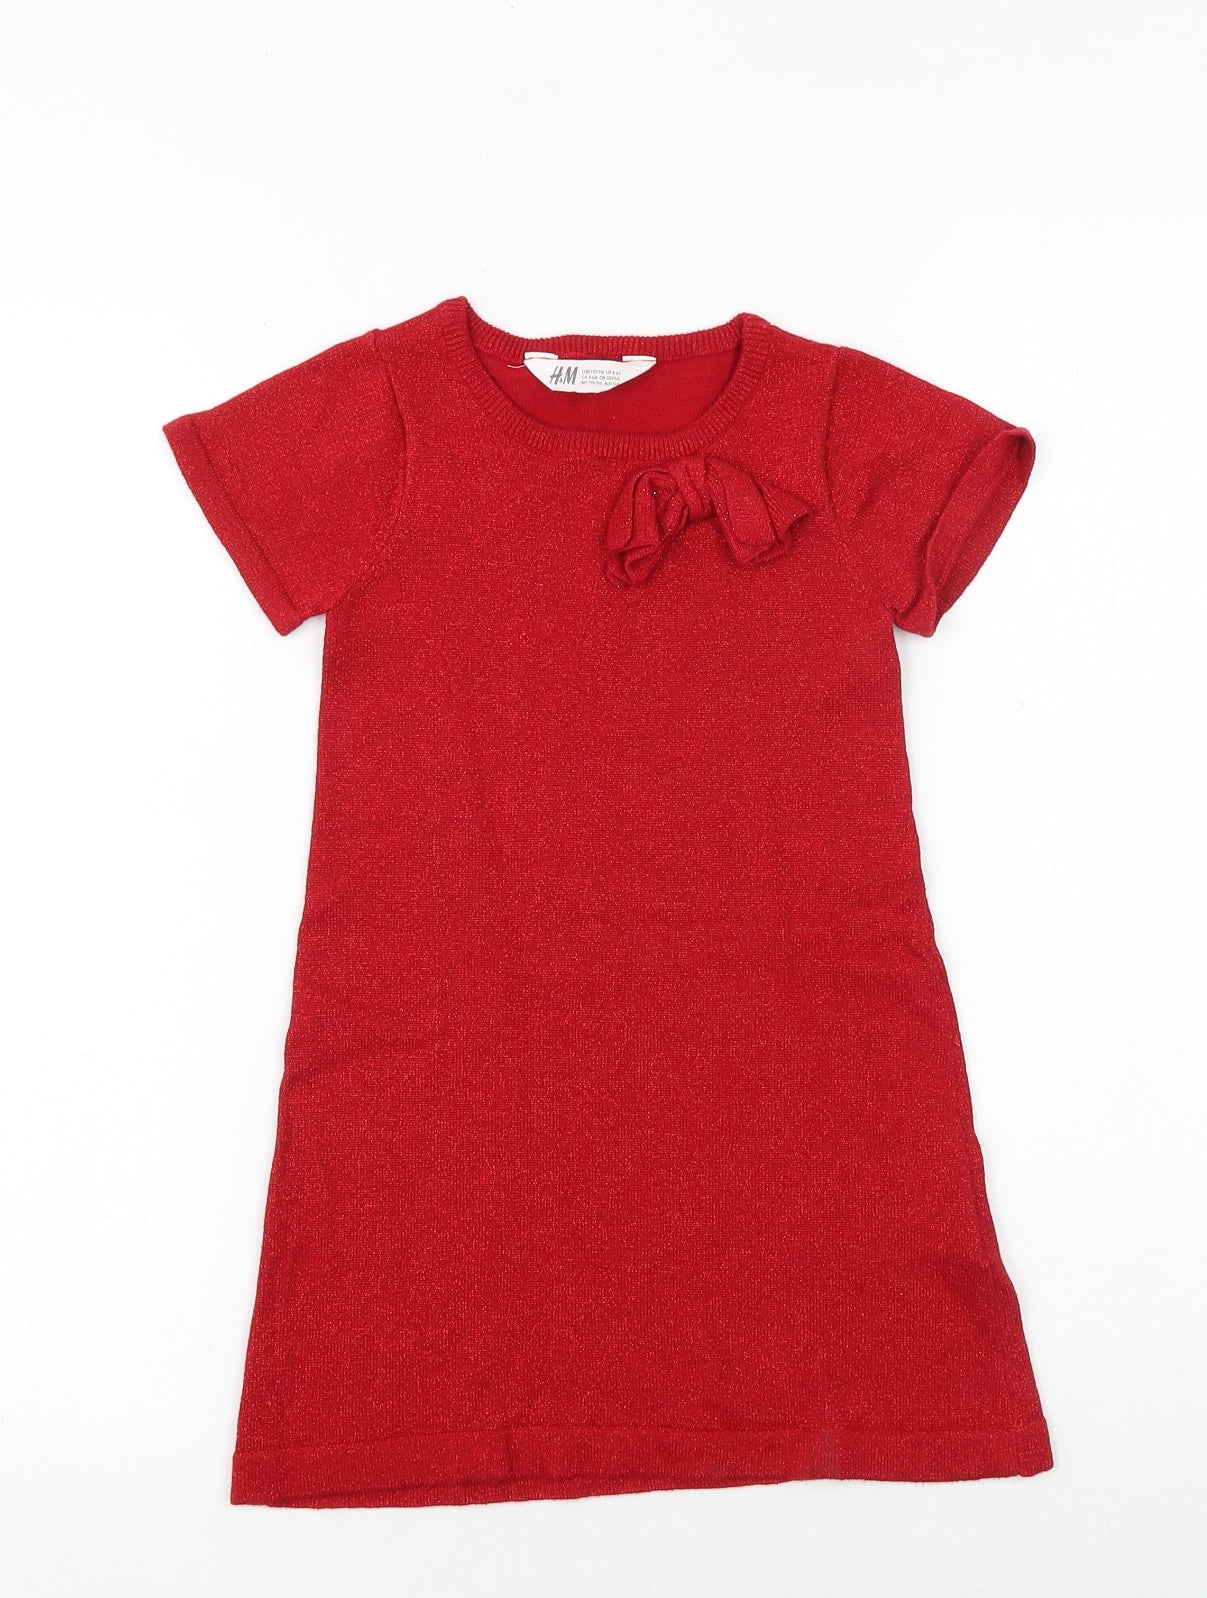 H&M Girls Red Cotton Jumper Dress Size 5-6 Years Round Neck Pullover